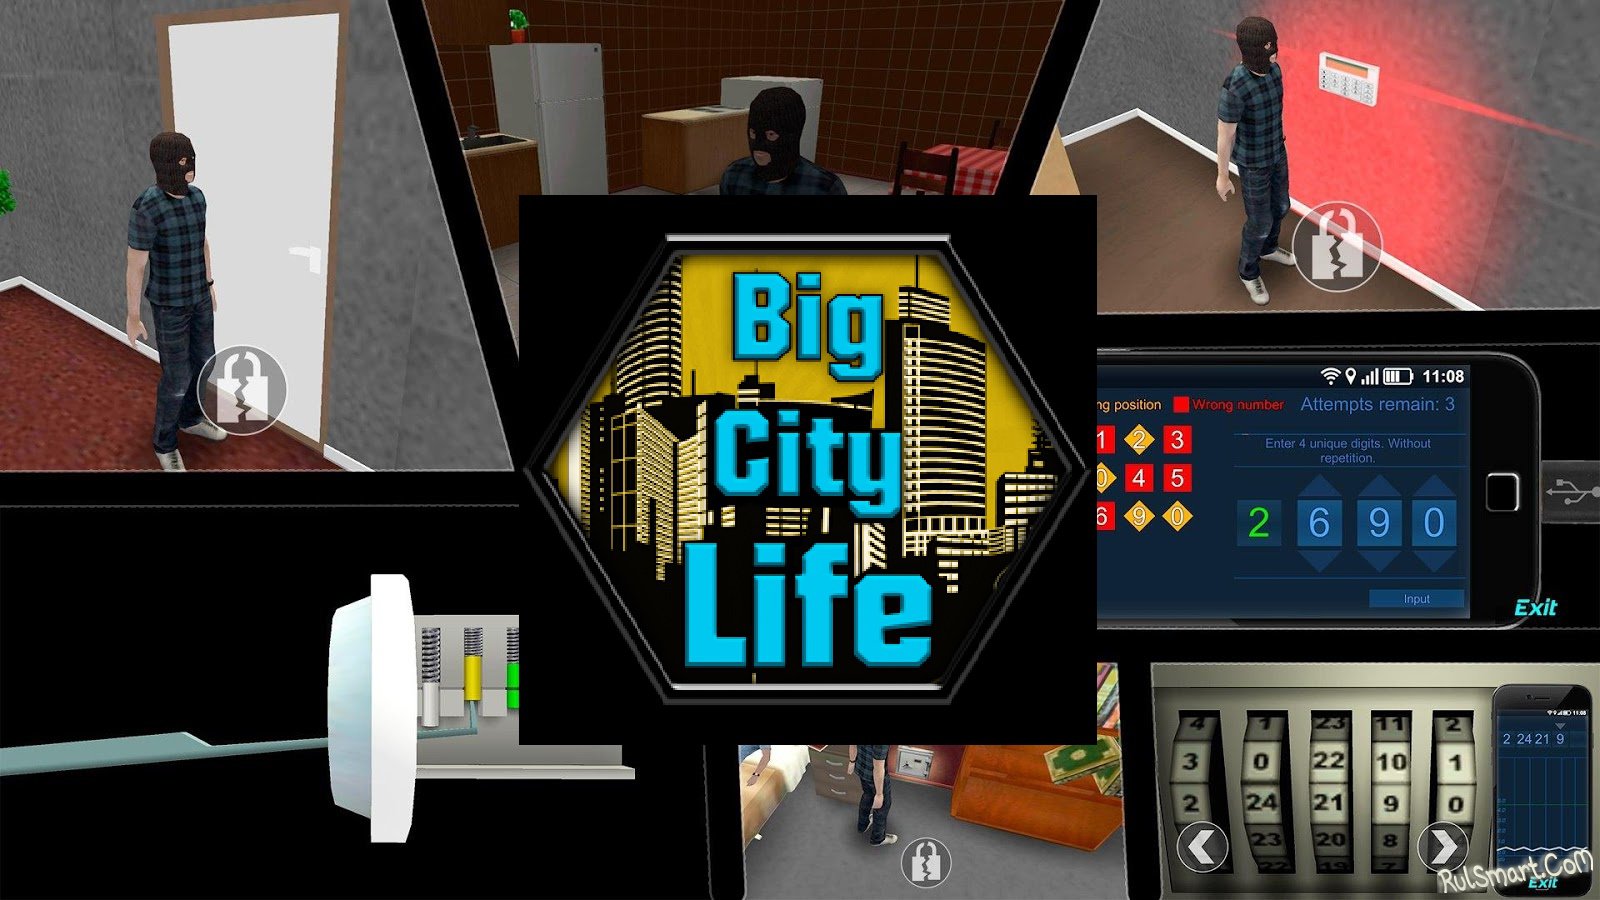 Как удалить биг лайф. Биг Сити симулятор. City Life симулятор. Биг Сити лайф игра. City Life на андроид игра.